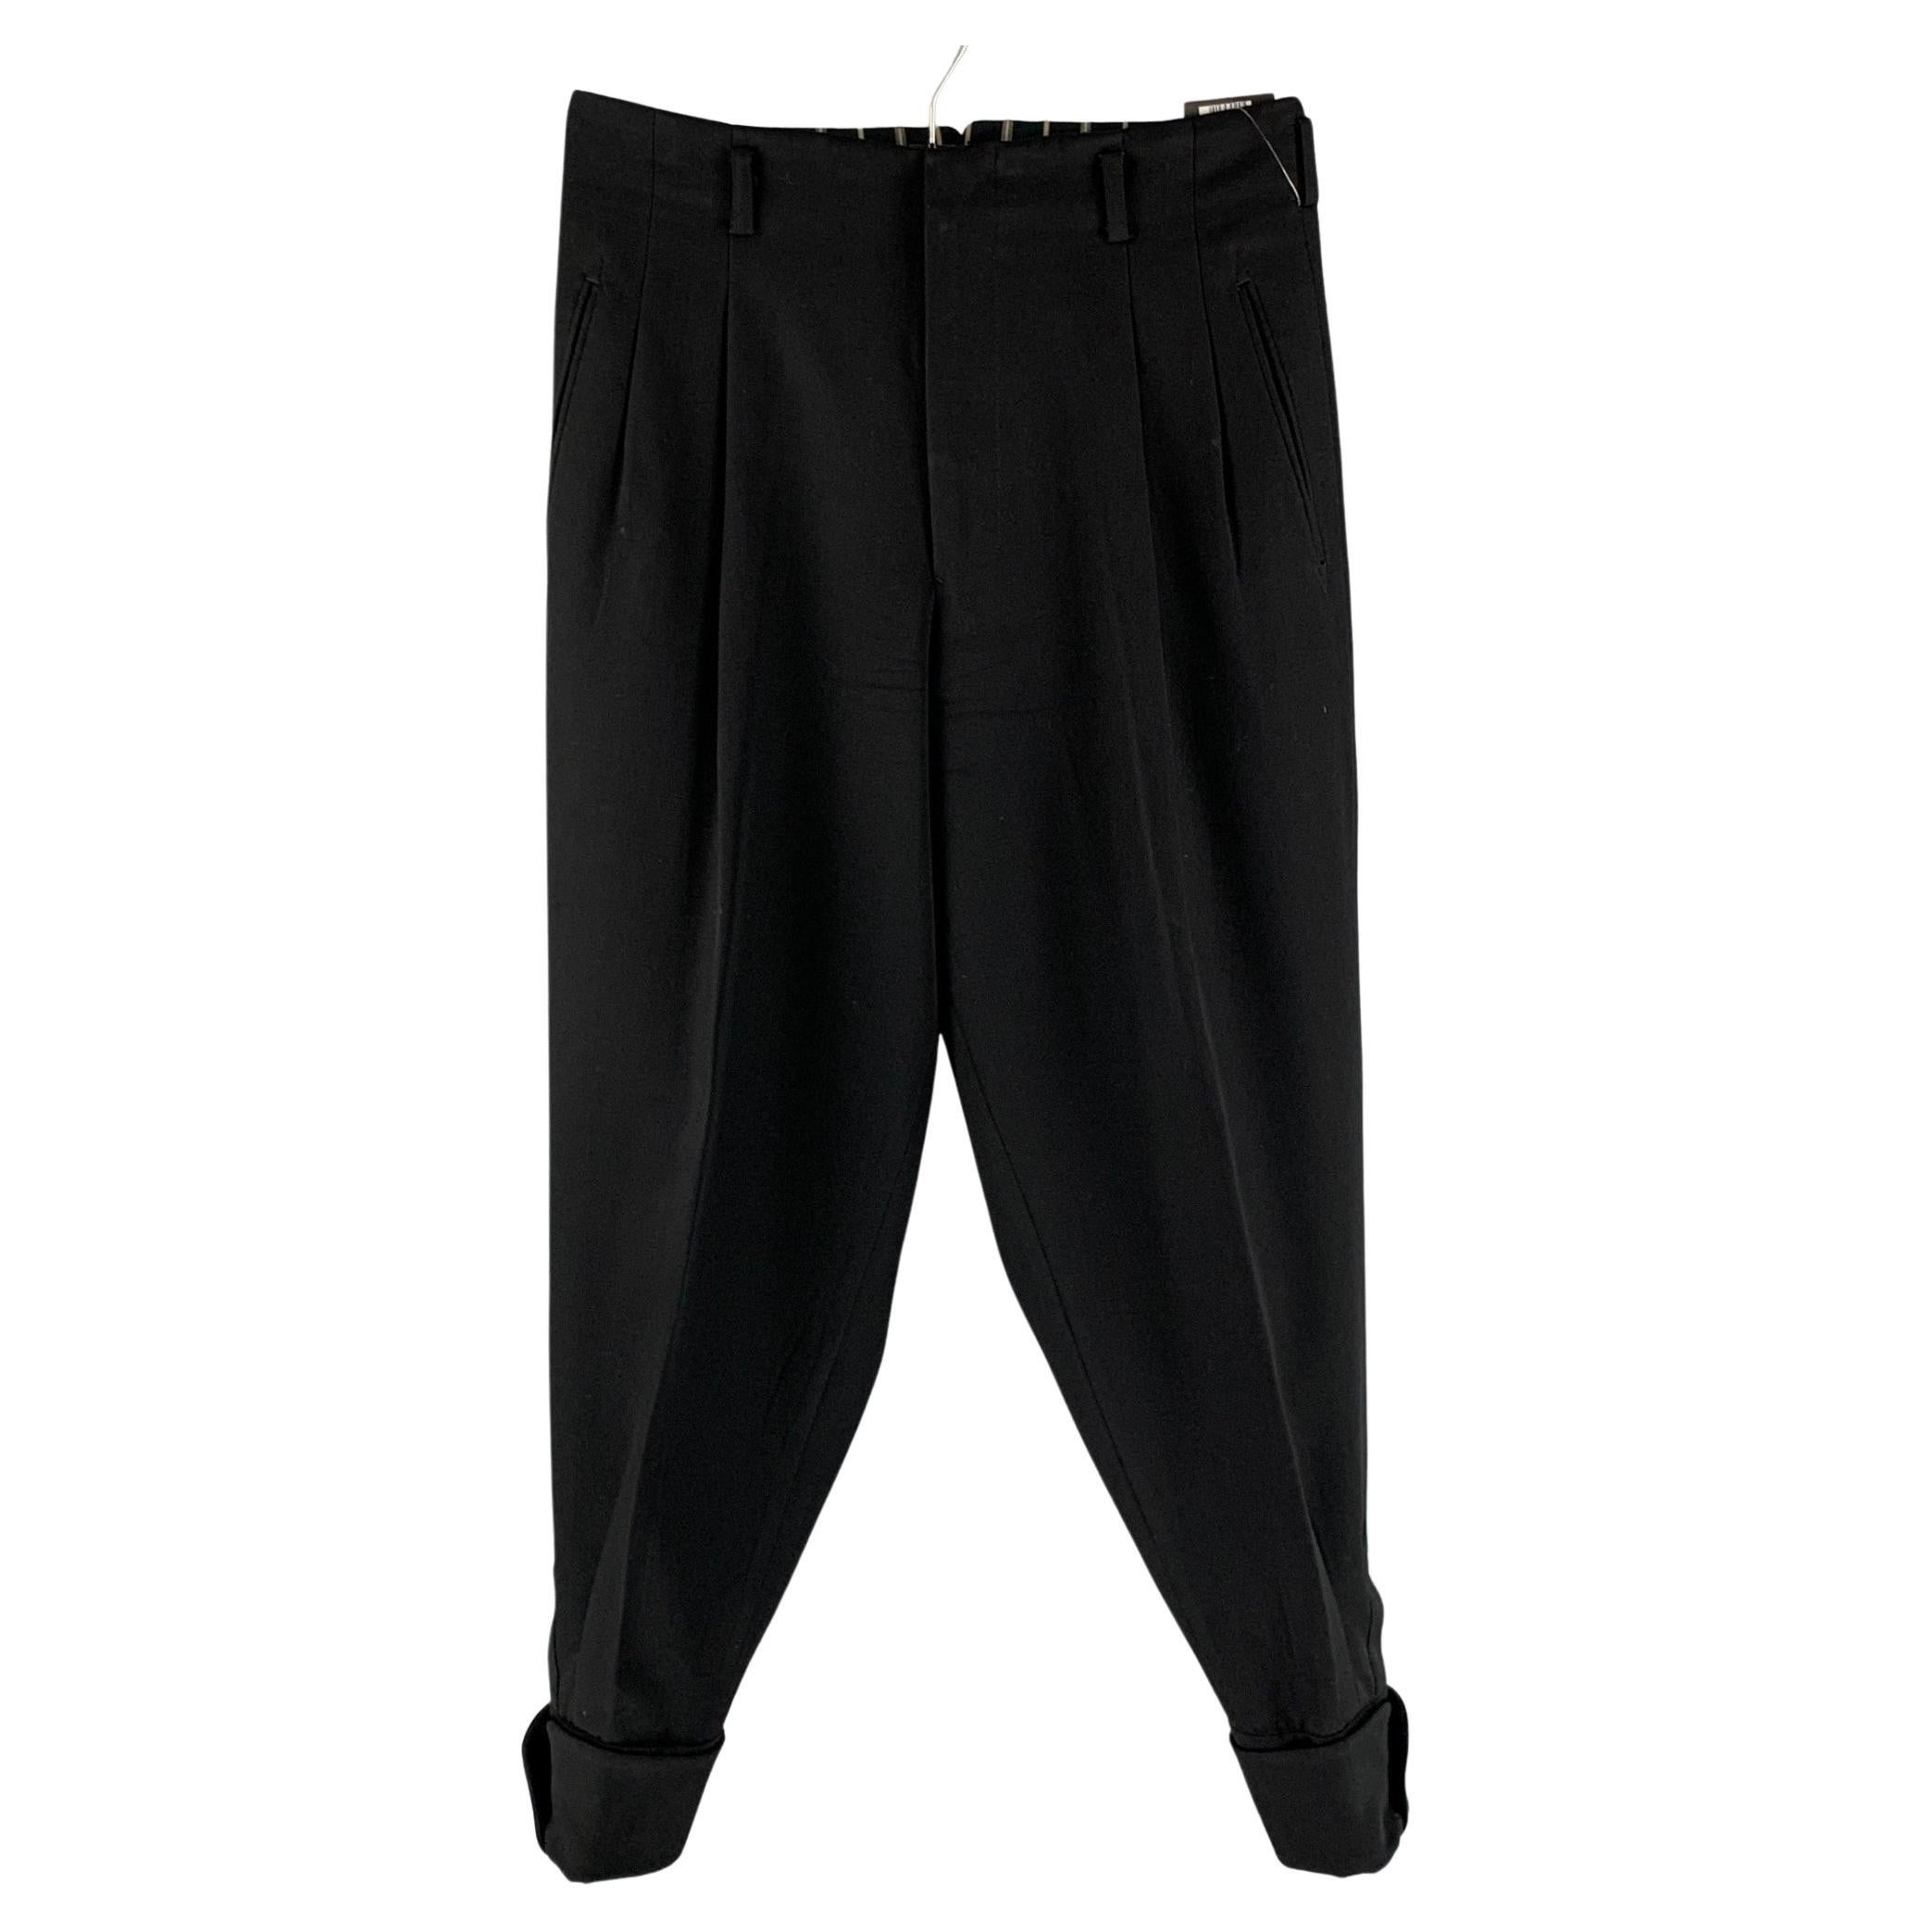 MATSUDA Size M Black Solid Wool Pleated Dress Pants